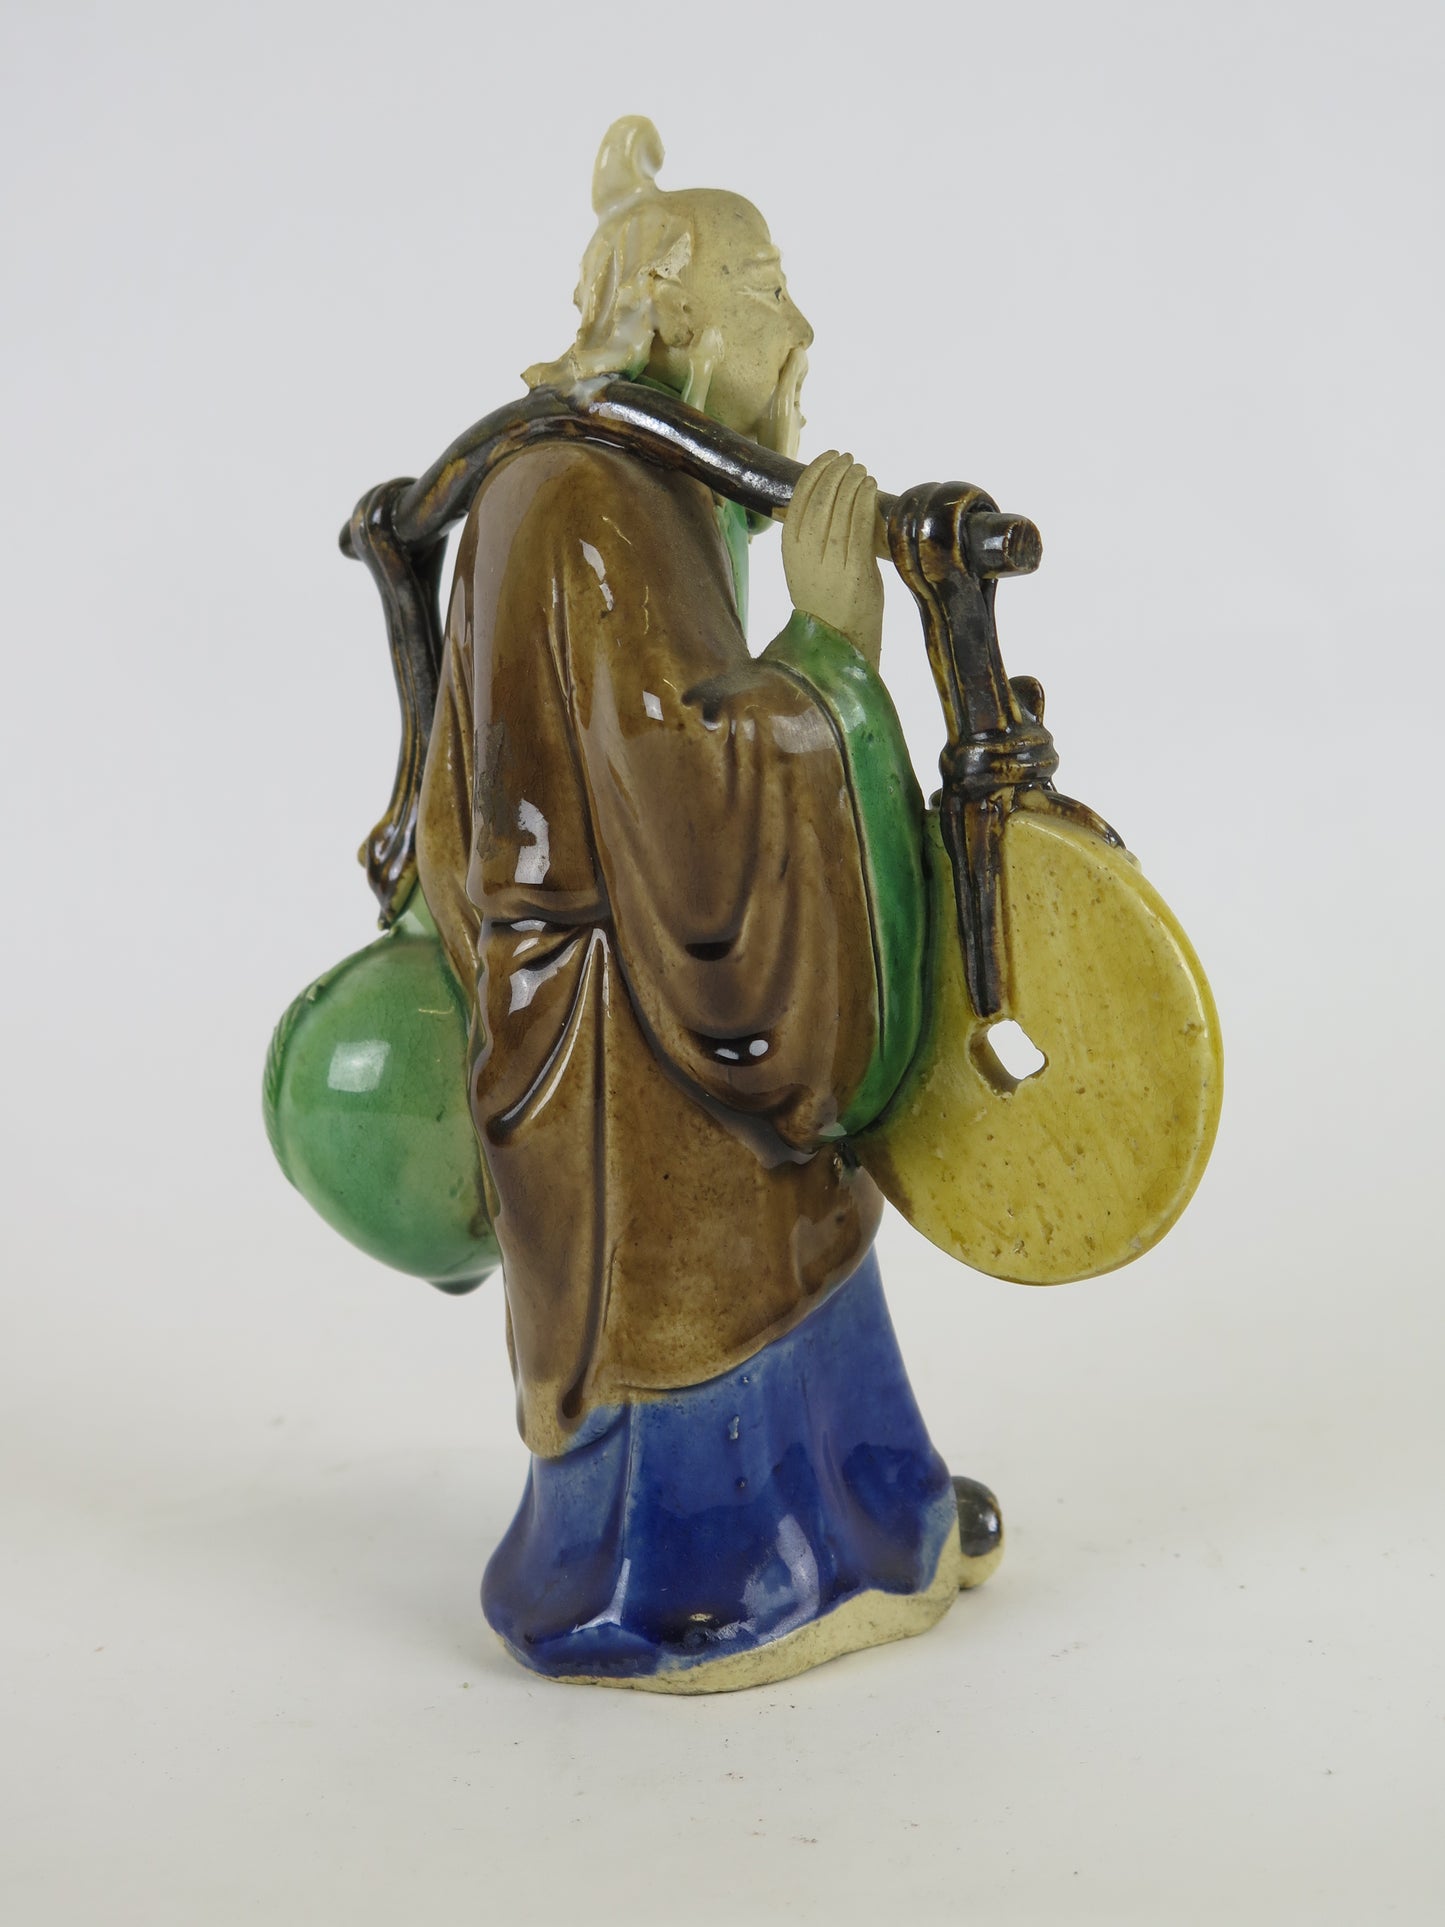 Chinese ancient ceramic shiwan mudman sage sage vs5 figurine